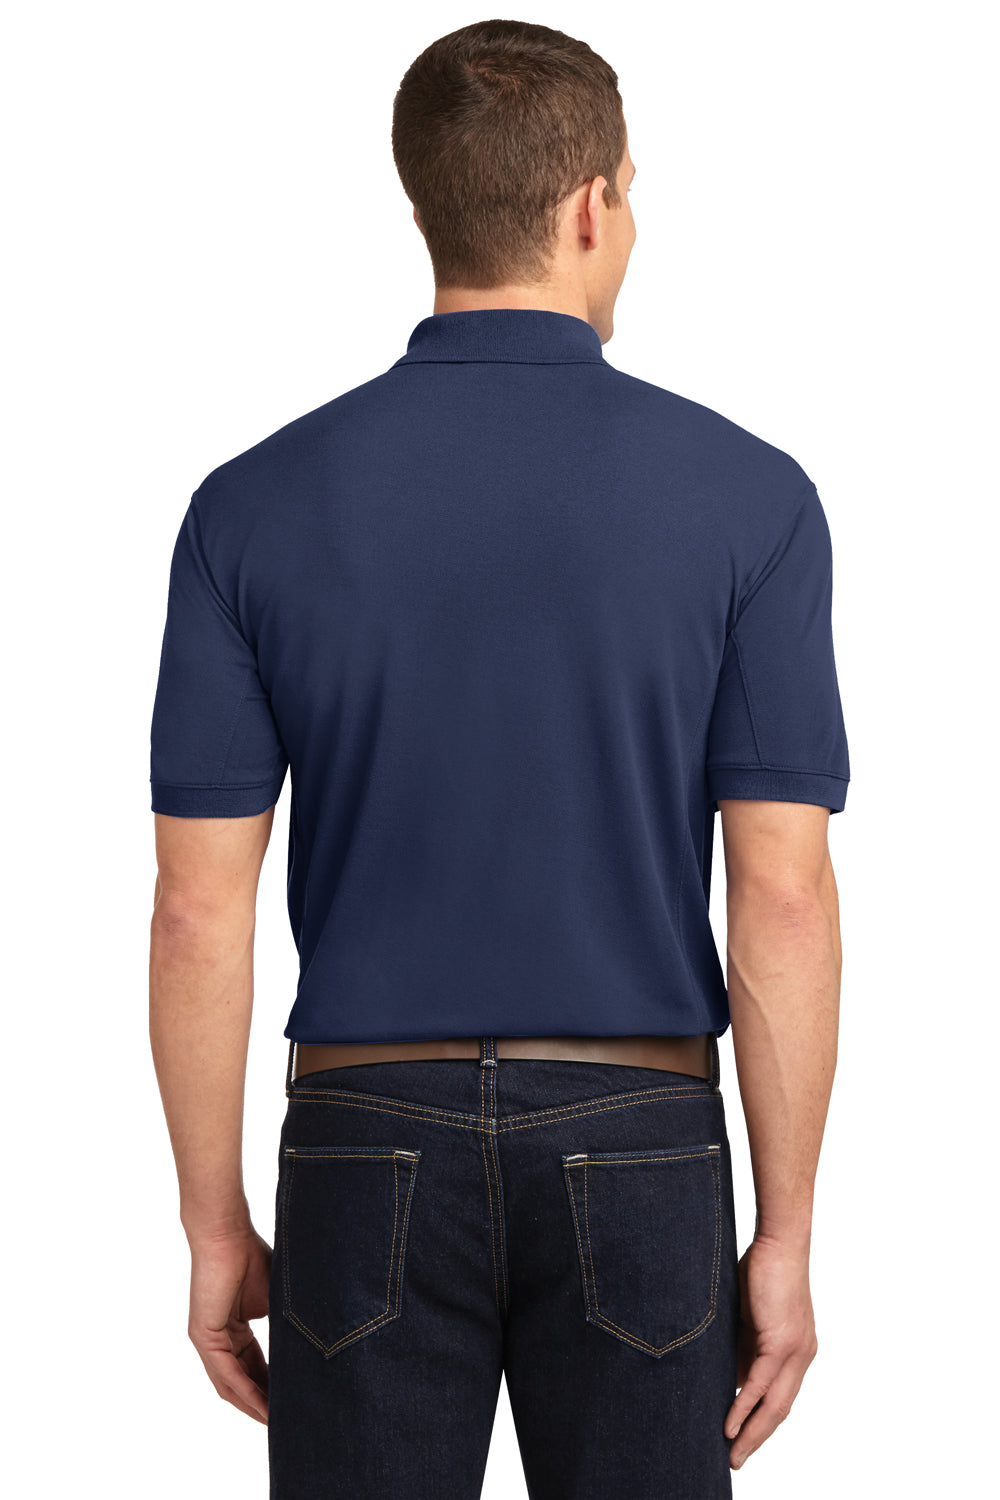 Port Authority K567 Mens 5-1 Performance Moisture Wicking Short Sleeve Polo Shirt Navy Blue Back